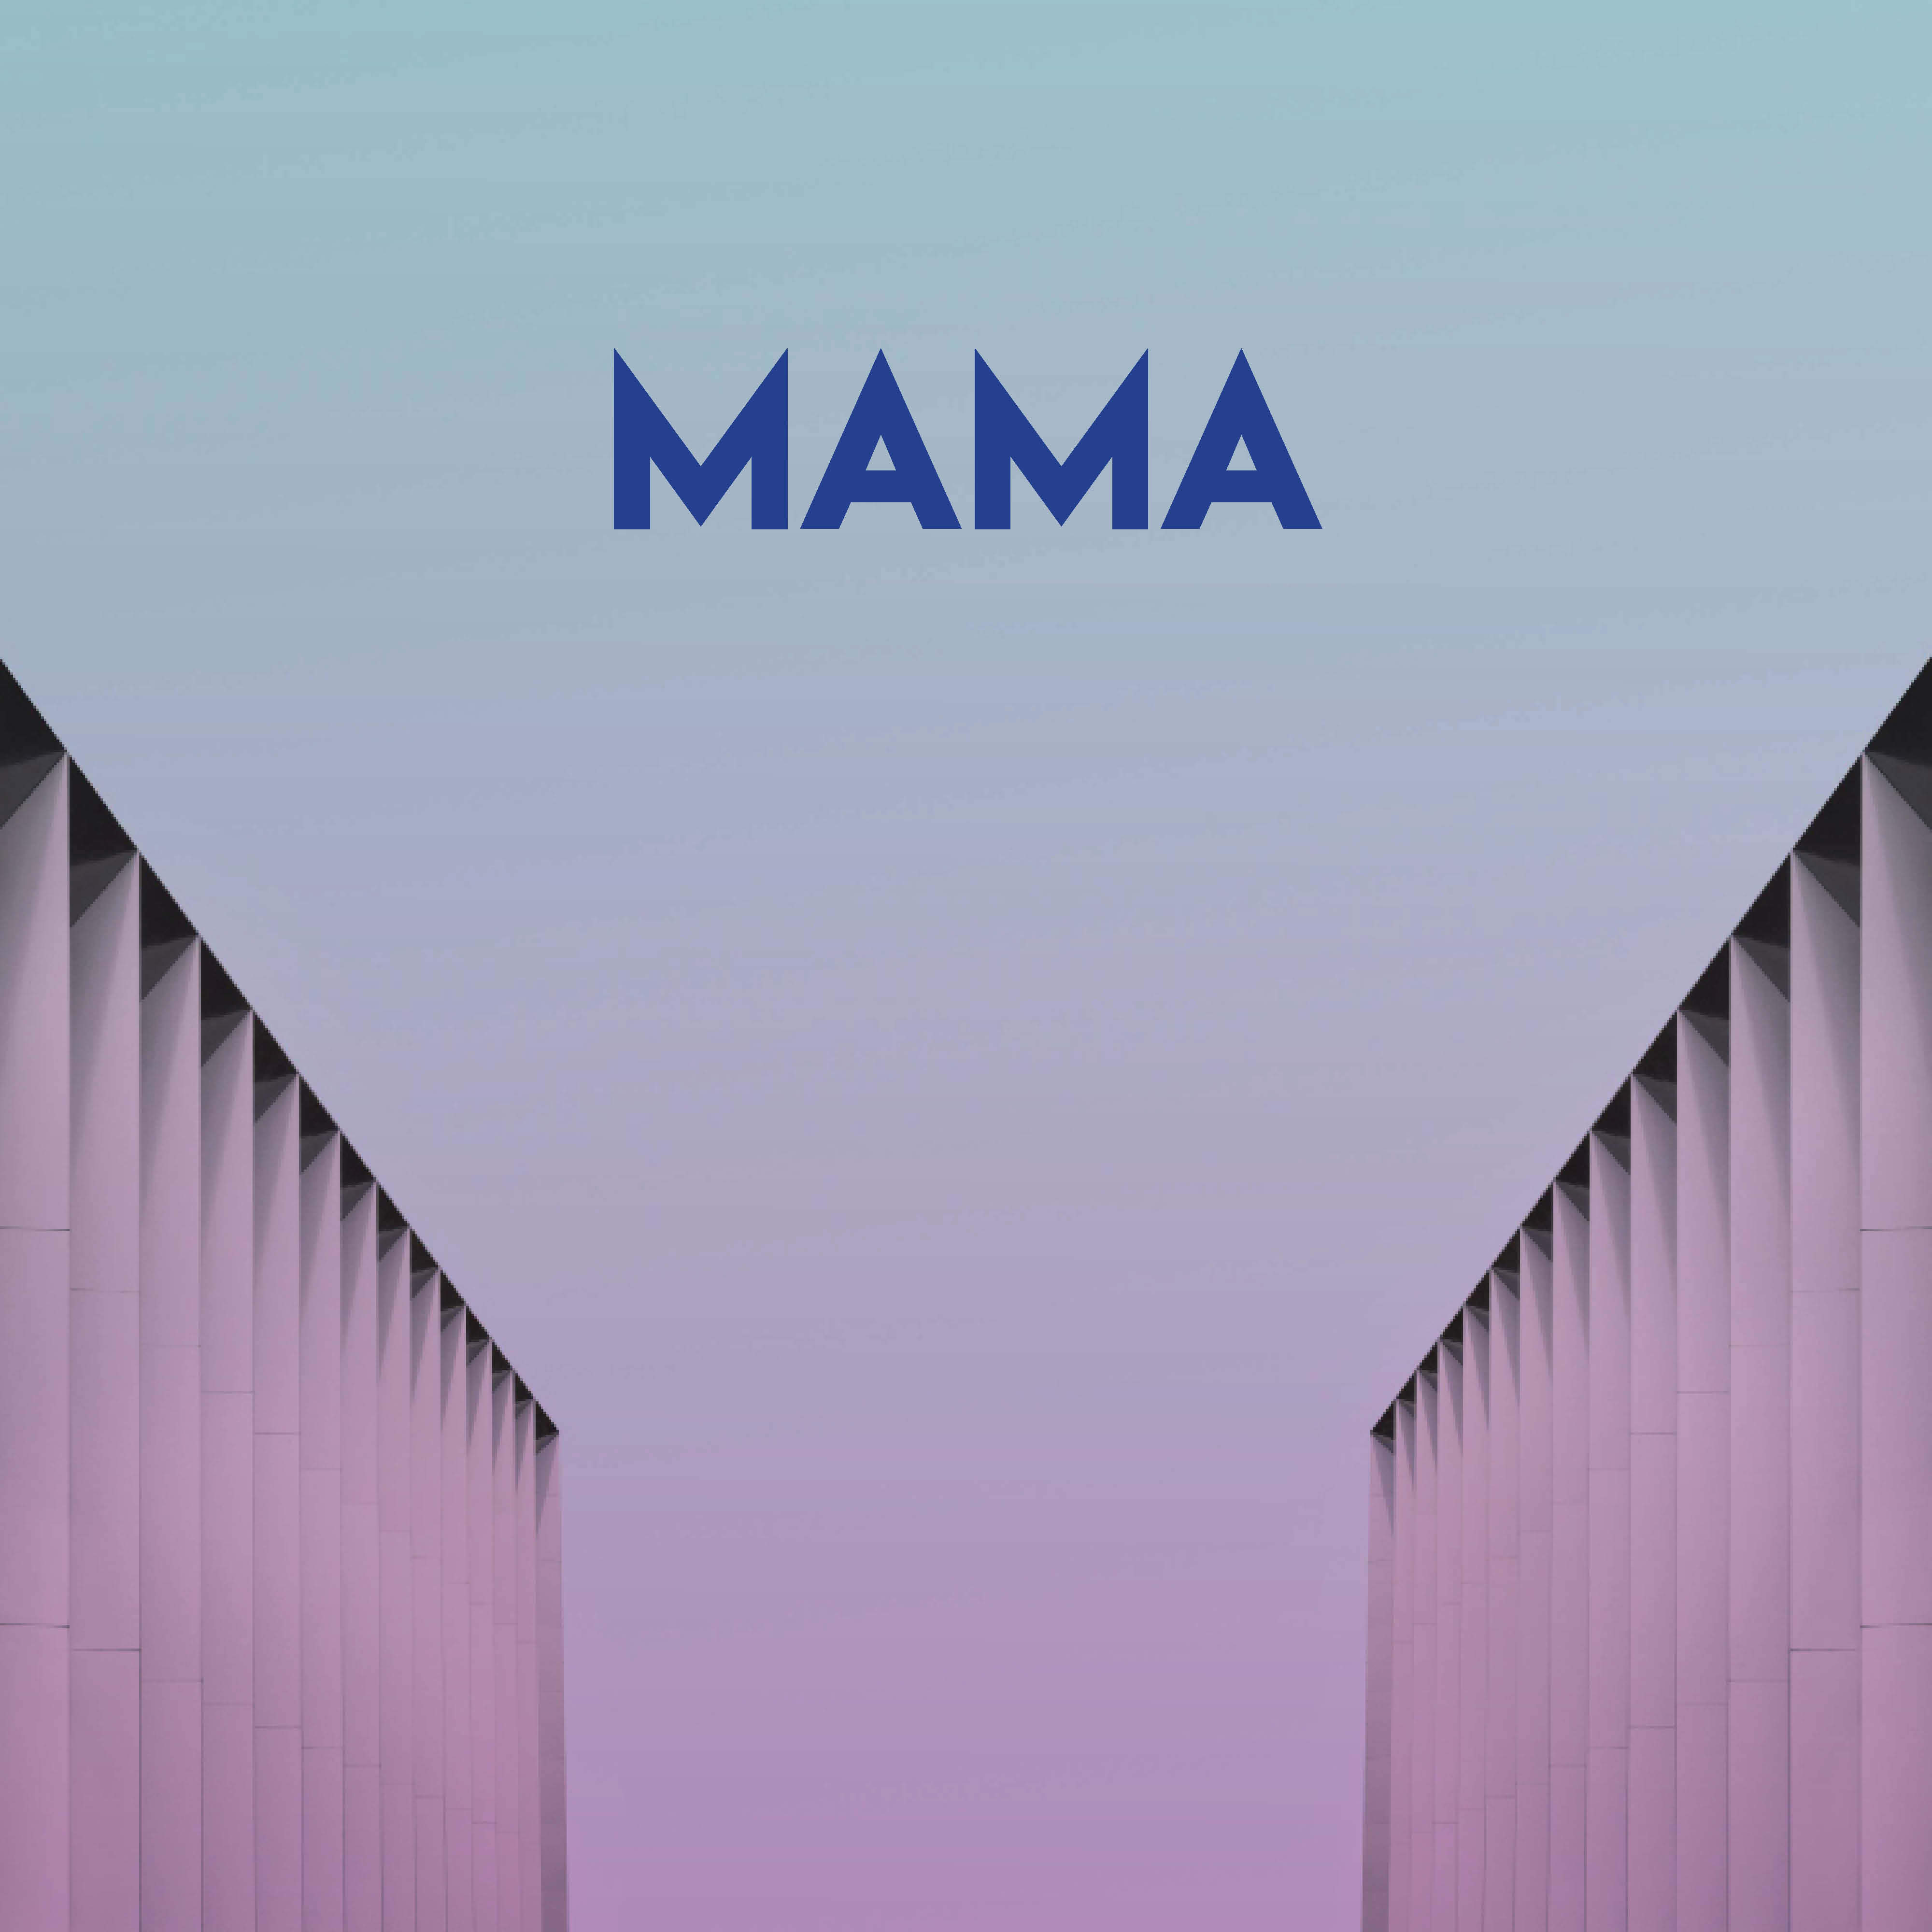 Mama